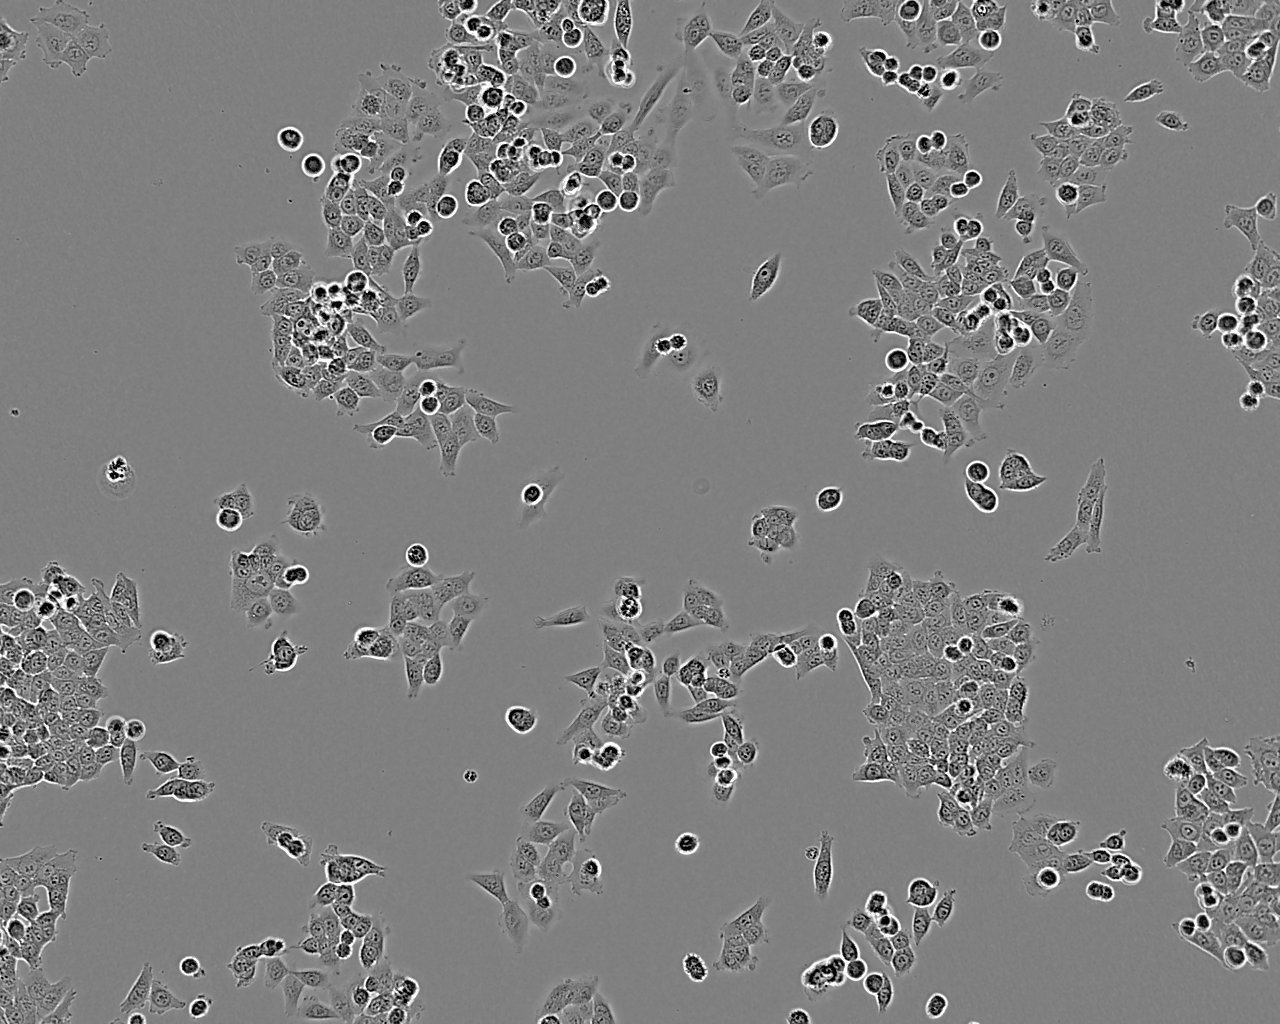 16HBE14o- epithelioid cells人支气管上皮样细胞系